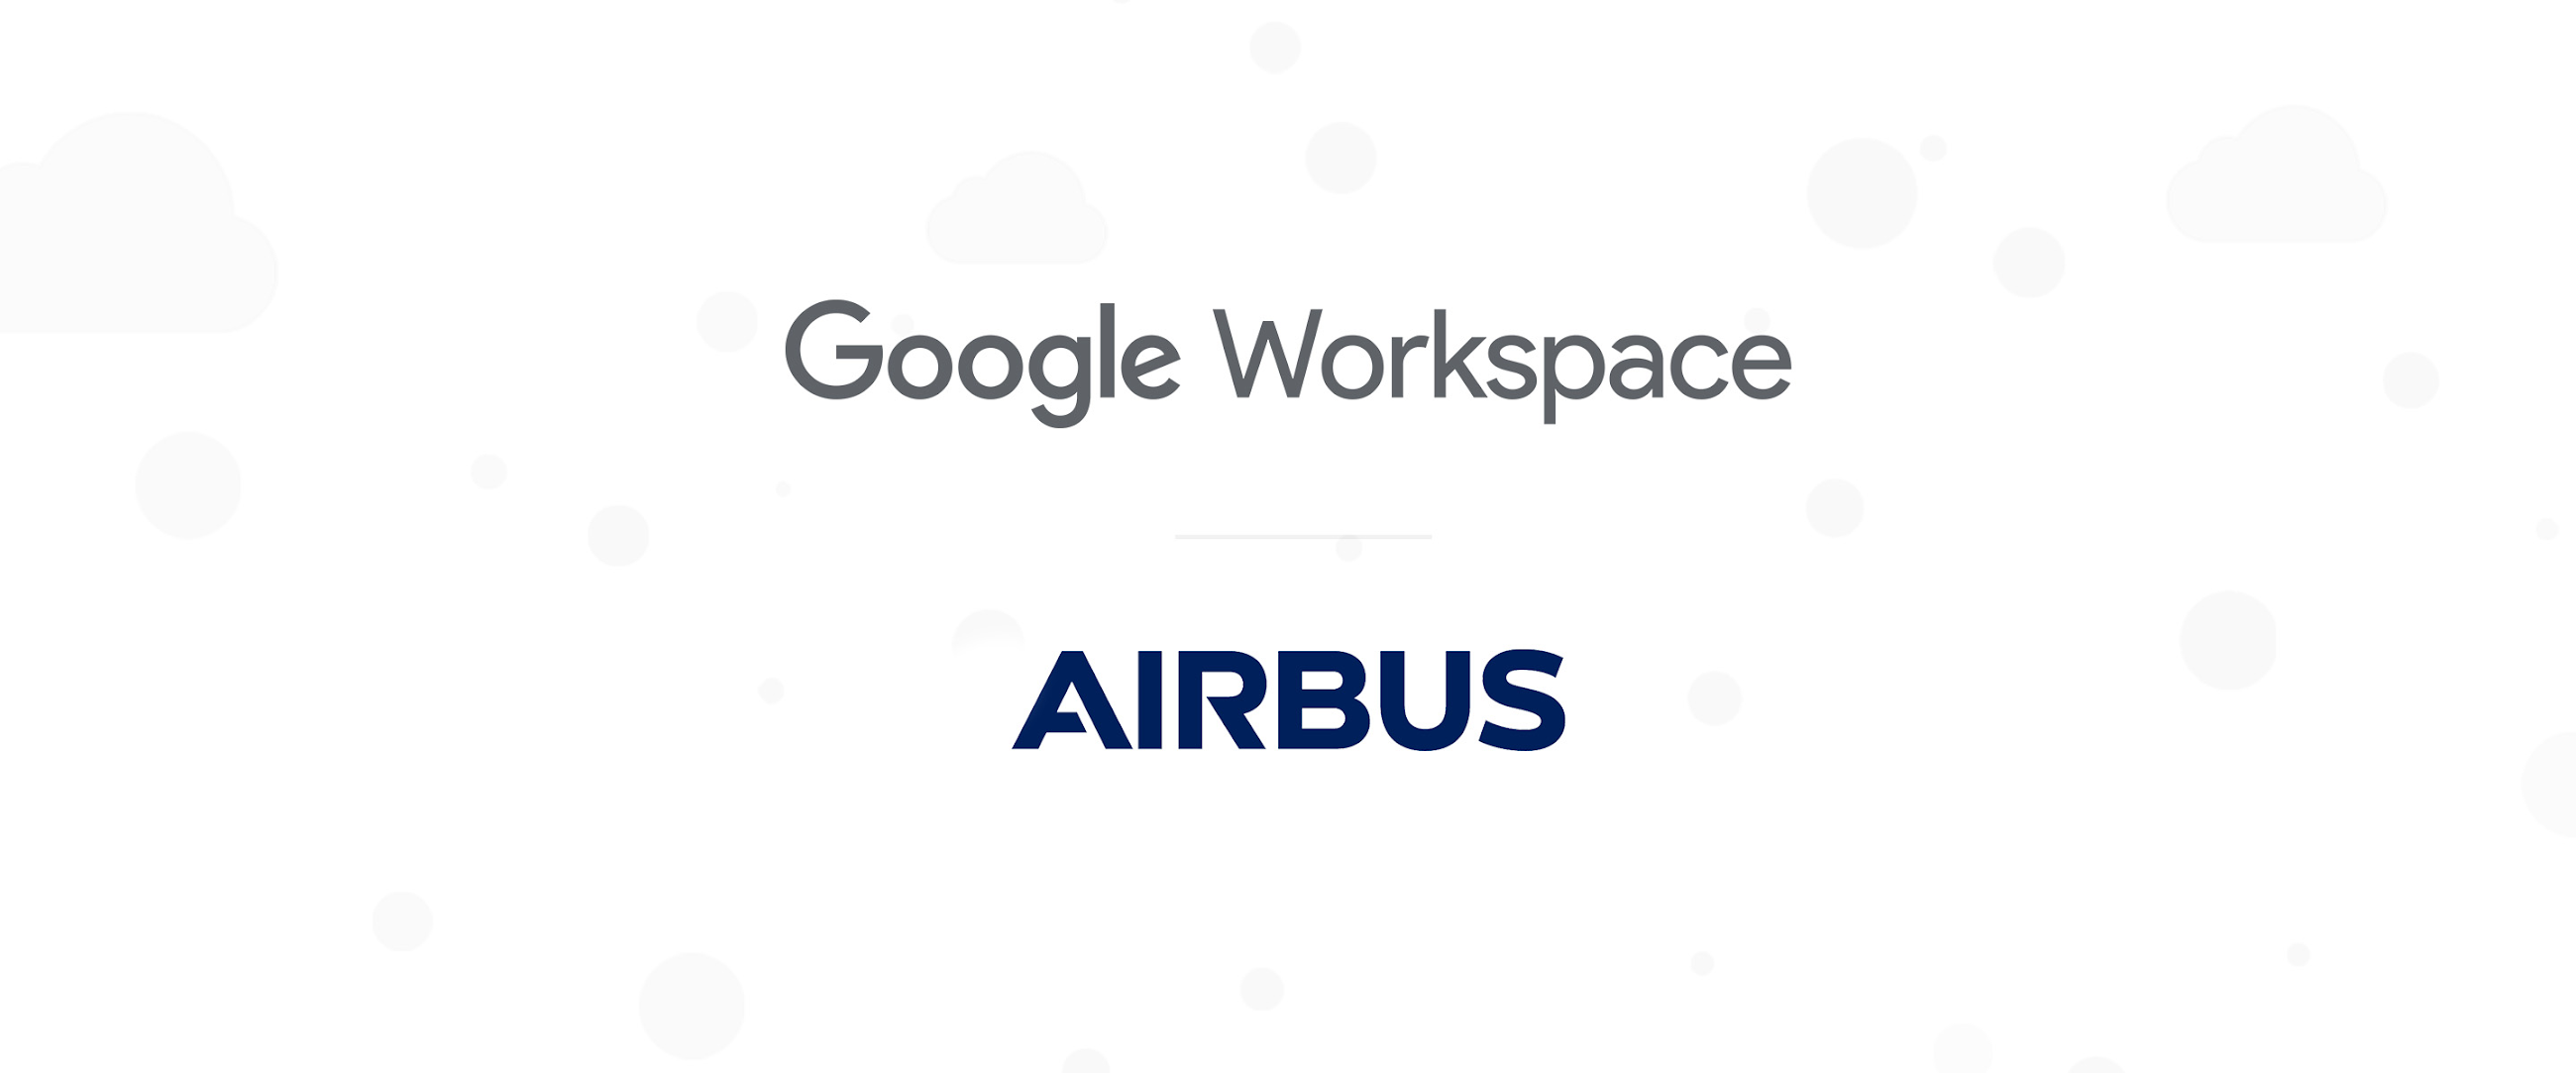 https://storage.googleapis.com/gweb-cloudblog-publish/images/GWS_x_Airbus.max-2600x2600_Vg1lWqk.jpg